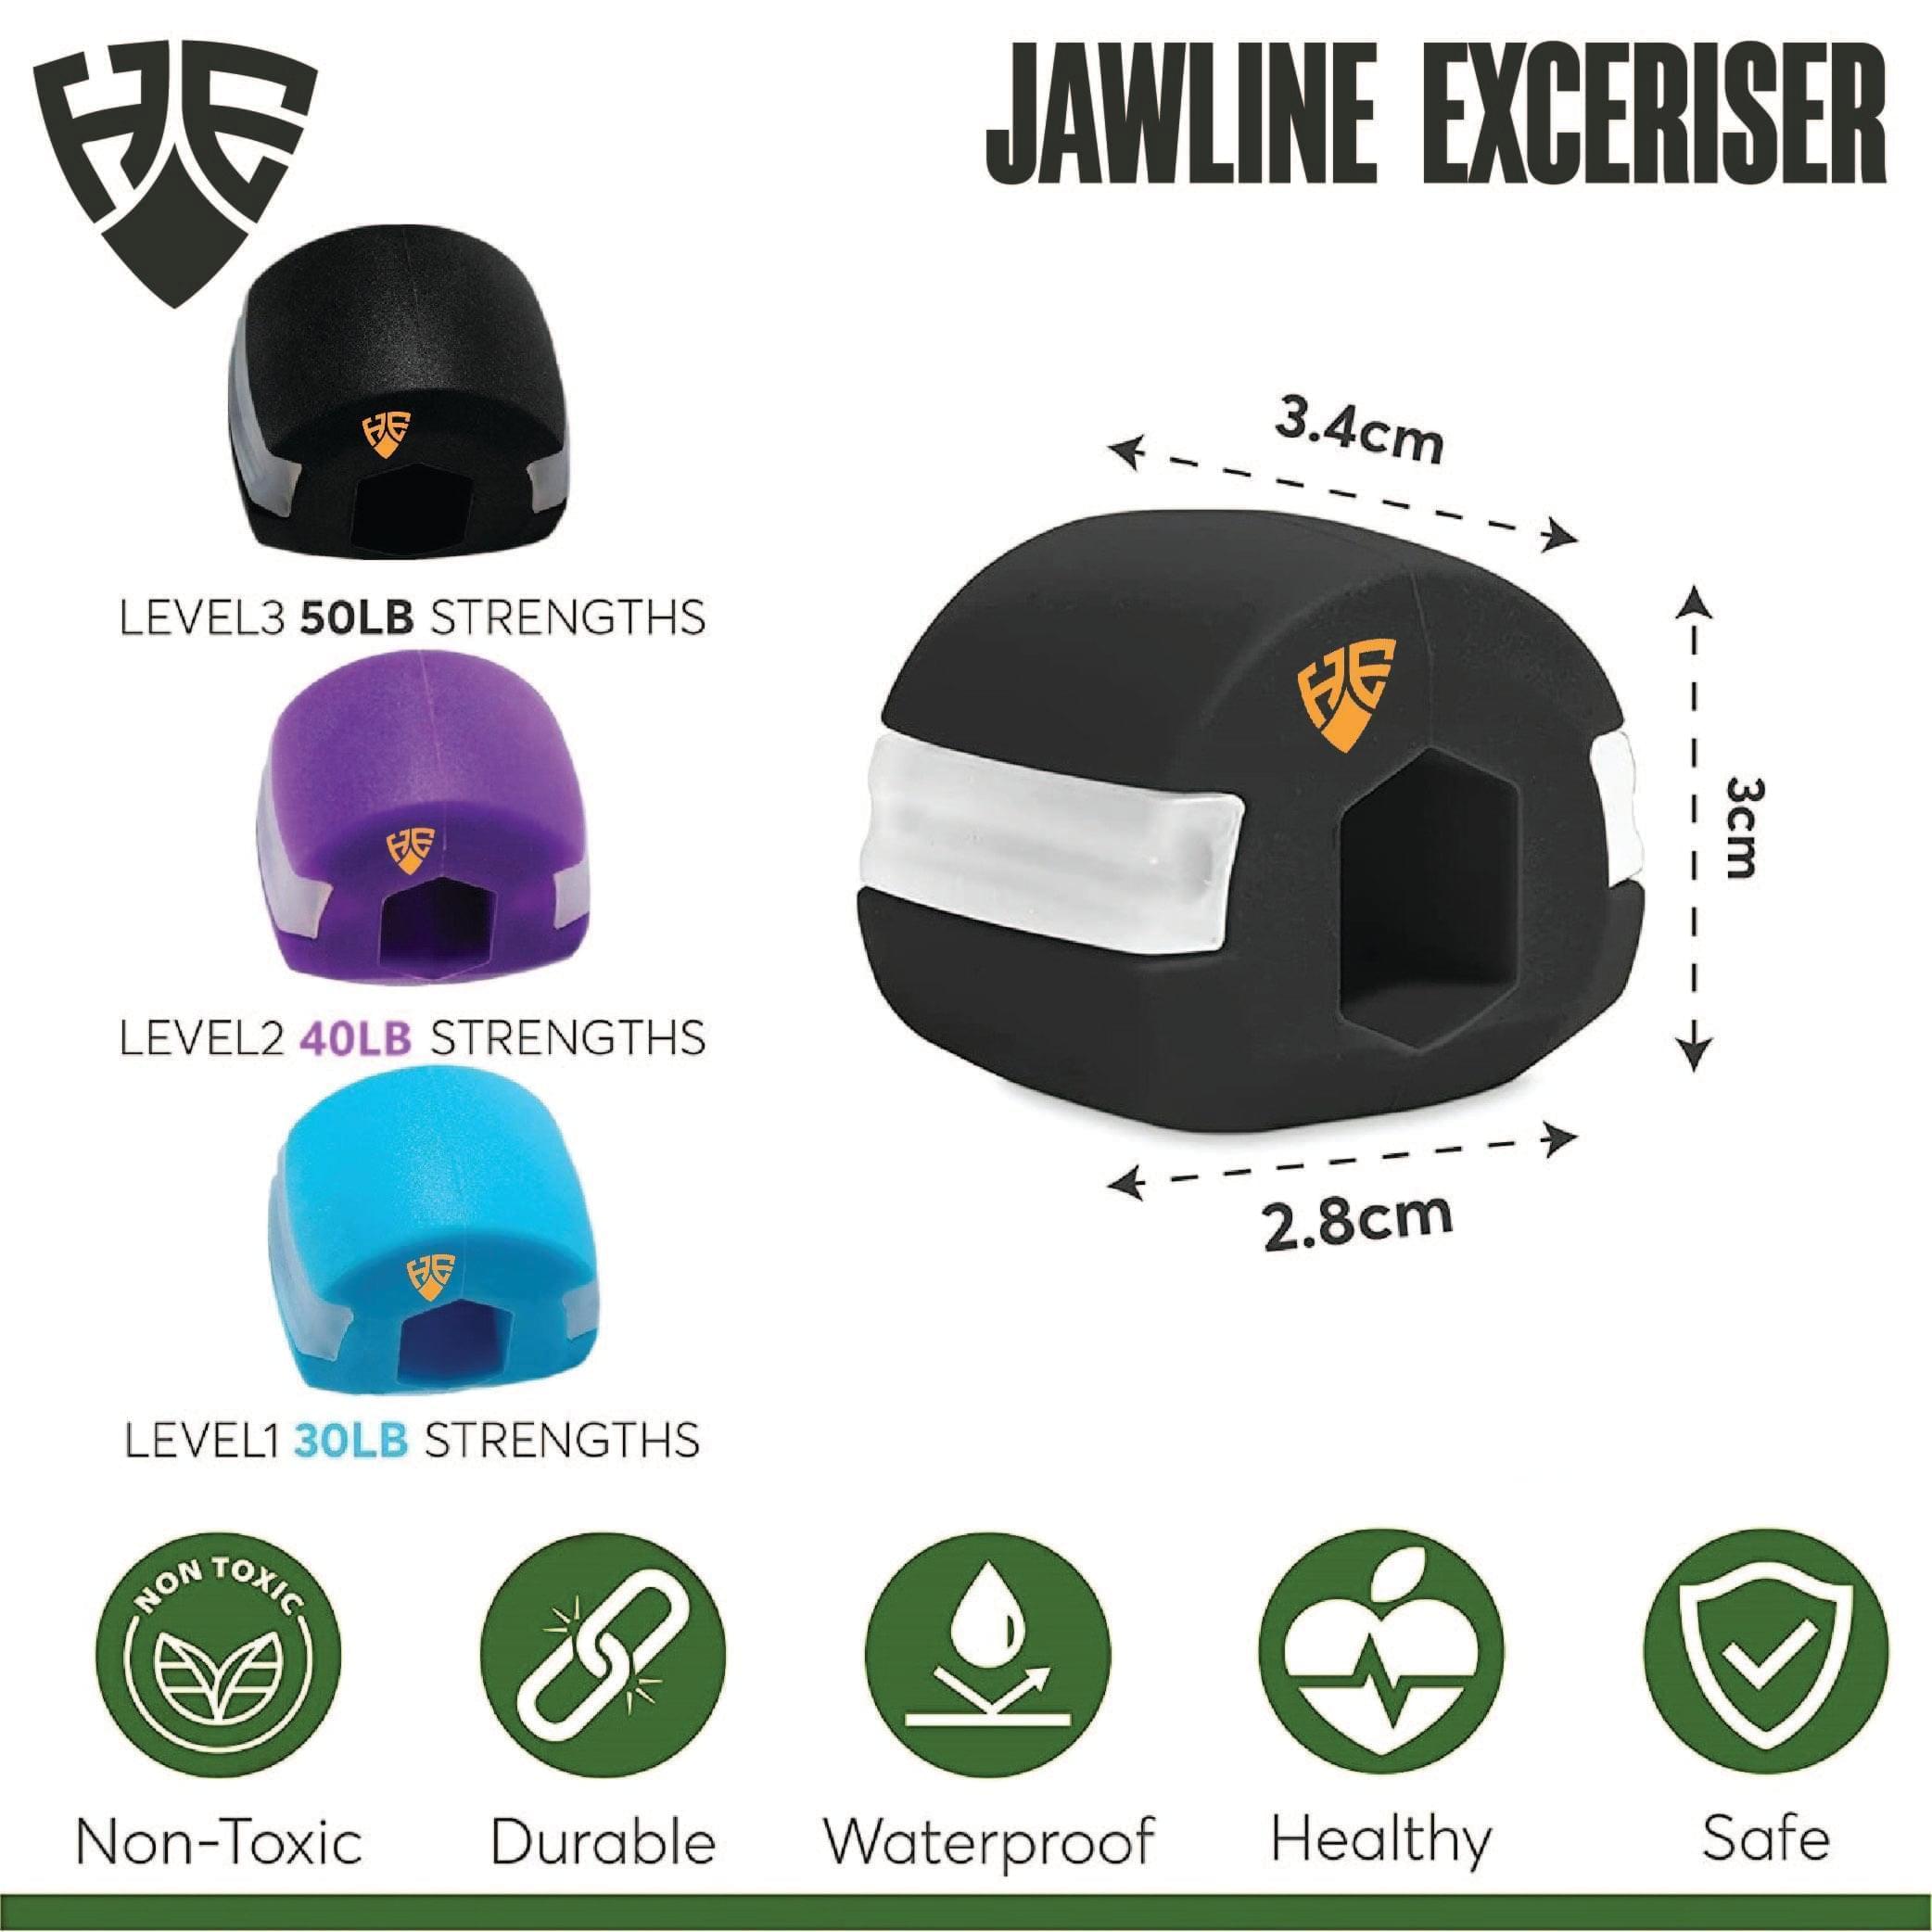 Jawline Exerciser